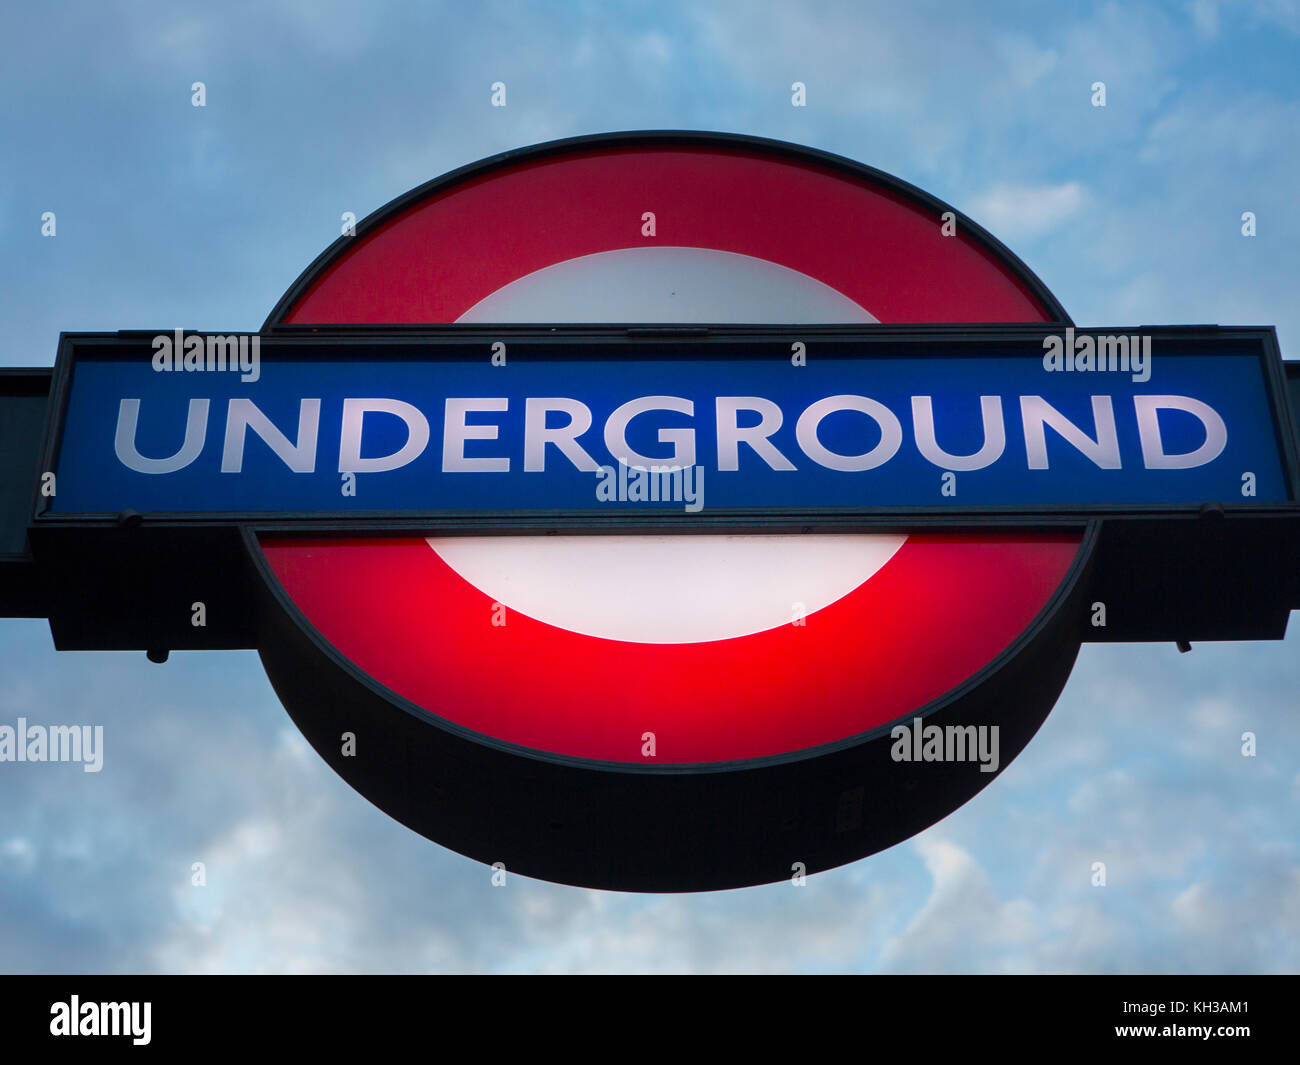 An underground tube station sign at dusk Stock Photo